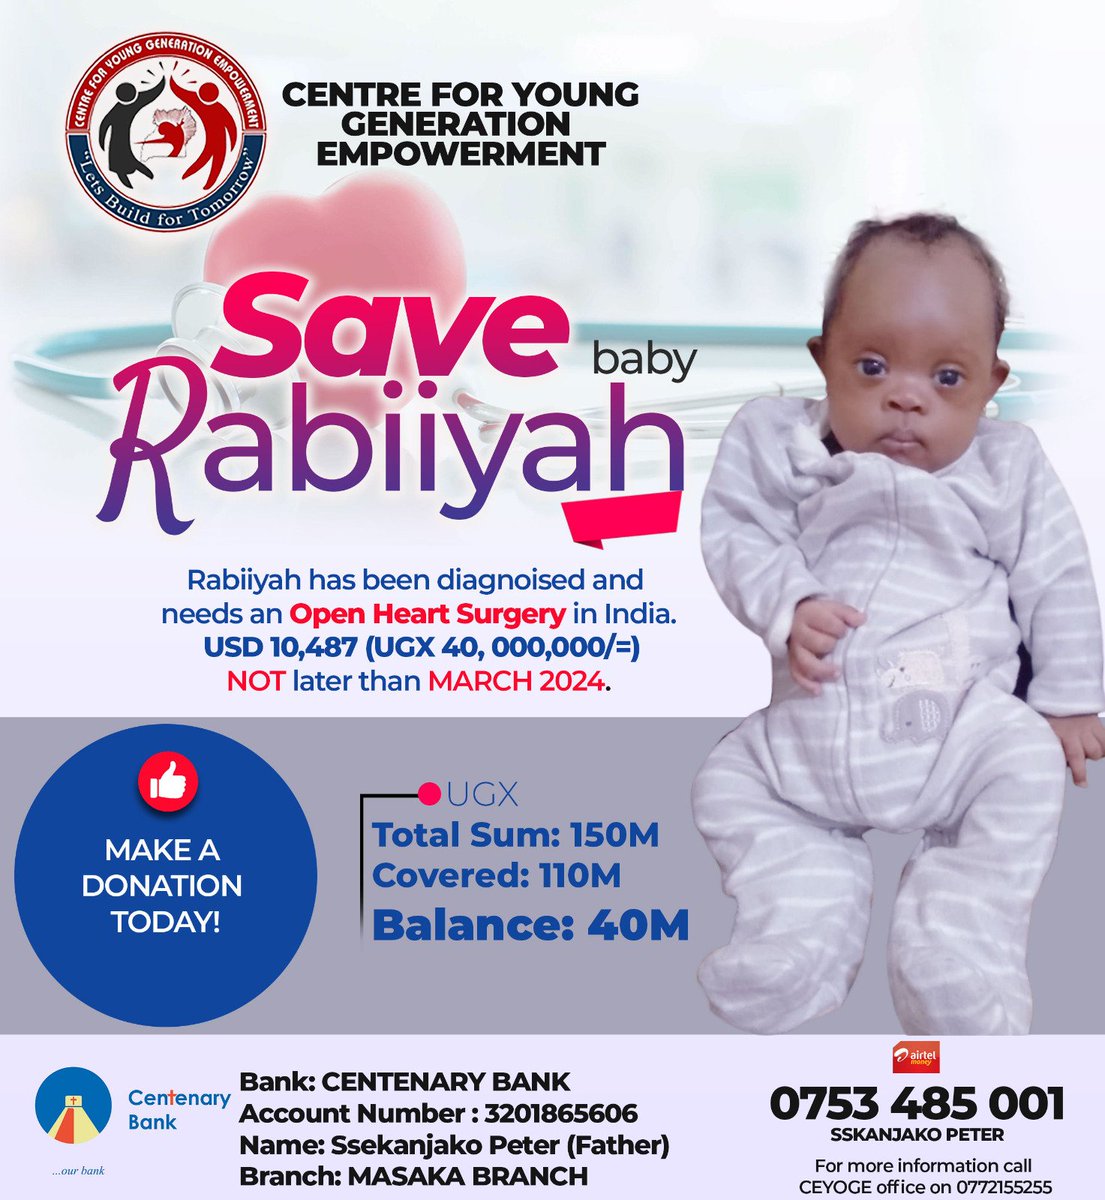 We dedicate this valentines day to baby Rabiyah. She is left with only one month to save her life. She needs USD 10,487 (Ugx 40,000,000) for a heart surgery @AnitahAmong @R_Nabbanja @SpeciosaW @DrSerunjogiEmma @AKasingye @salaamtvnews @Pearlfmradio @sadabkitatta79 @habib_mugerwa